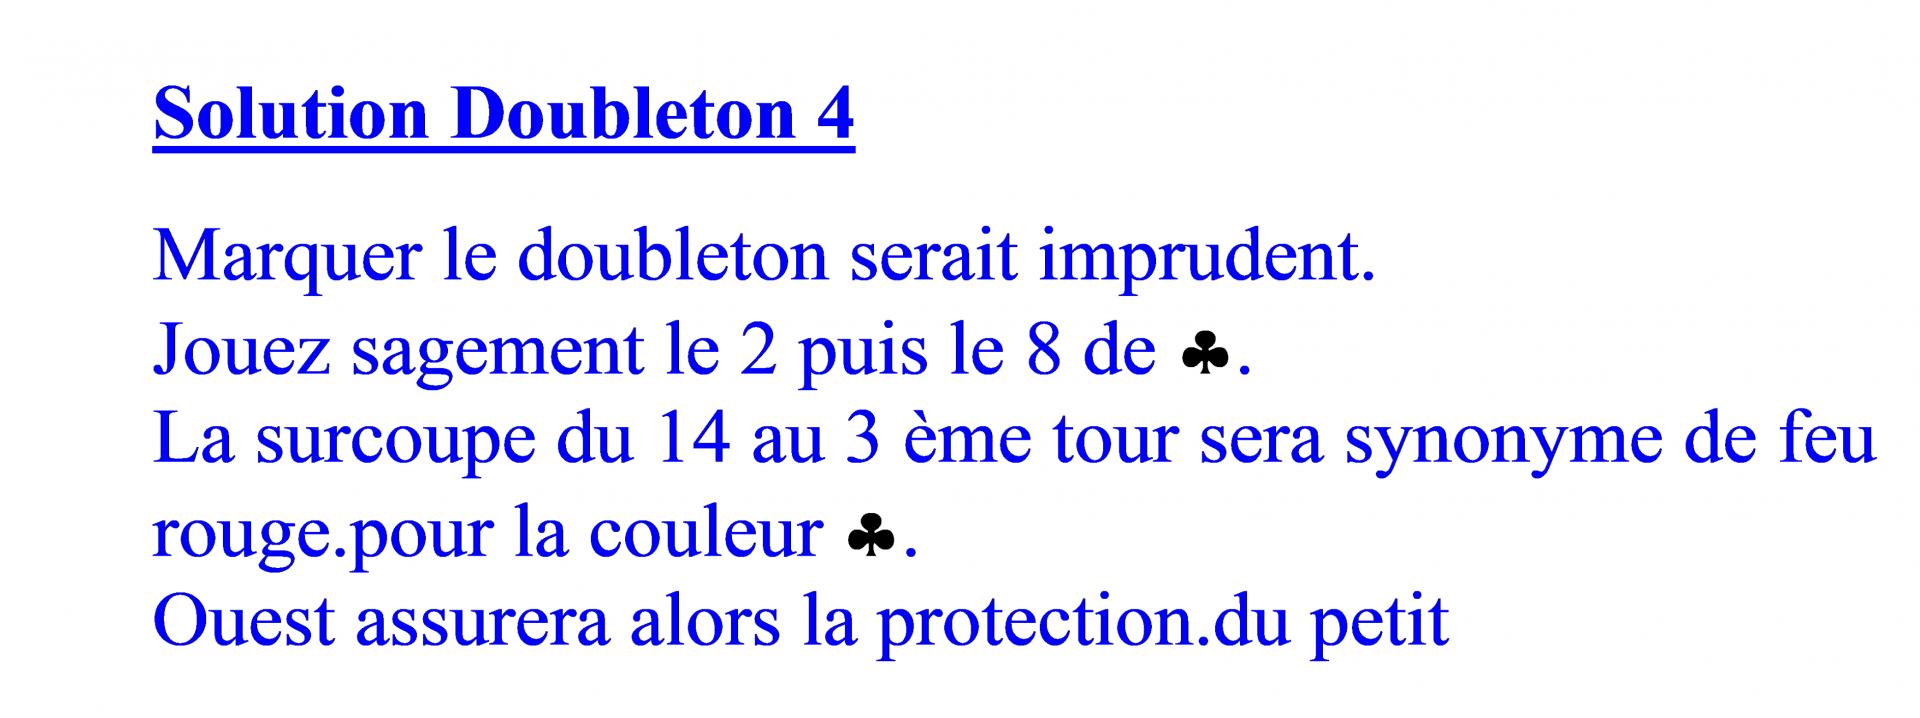 Doubleton 4 r